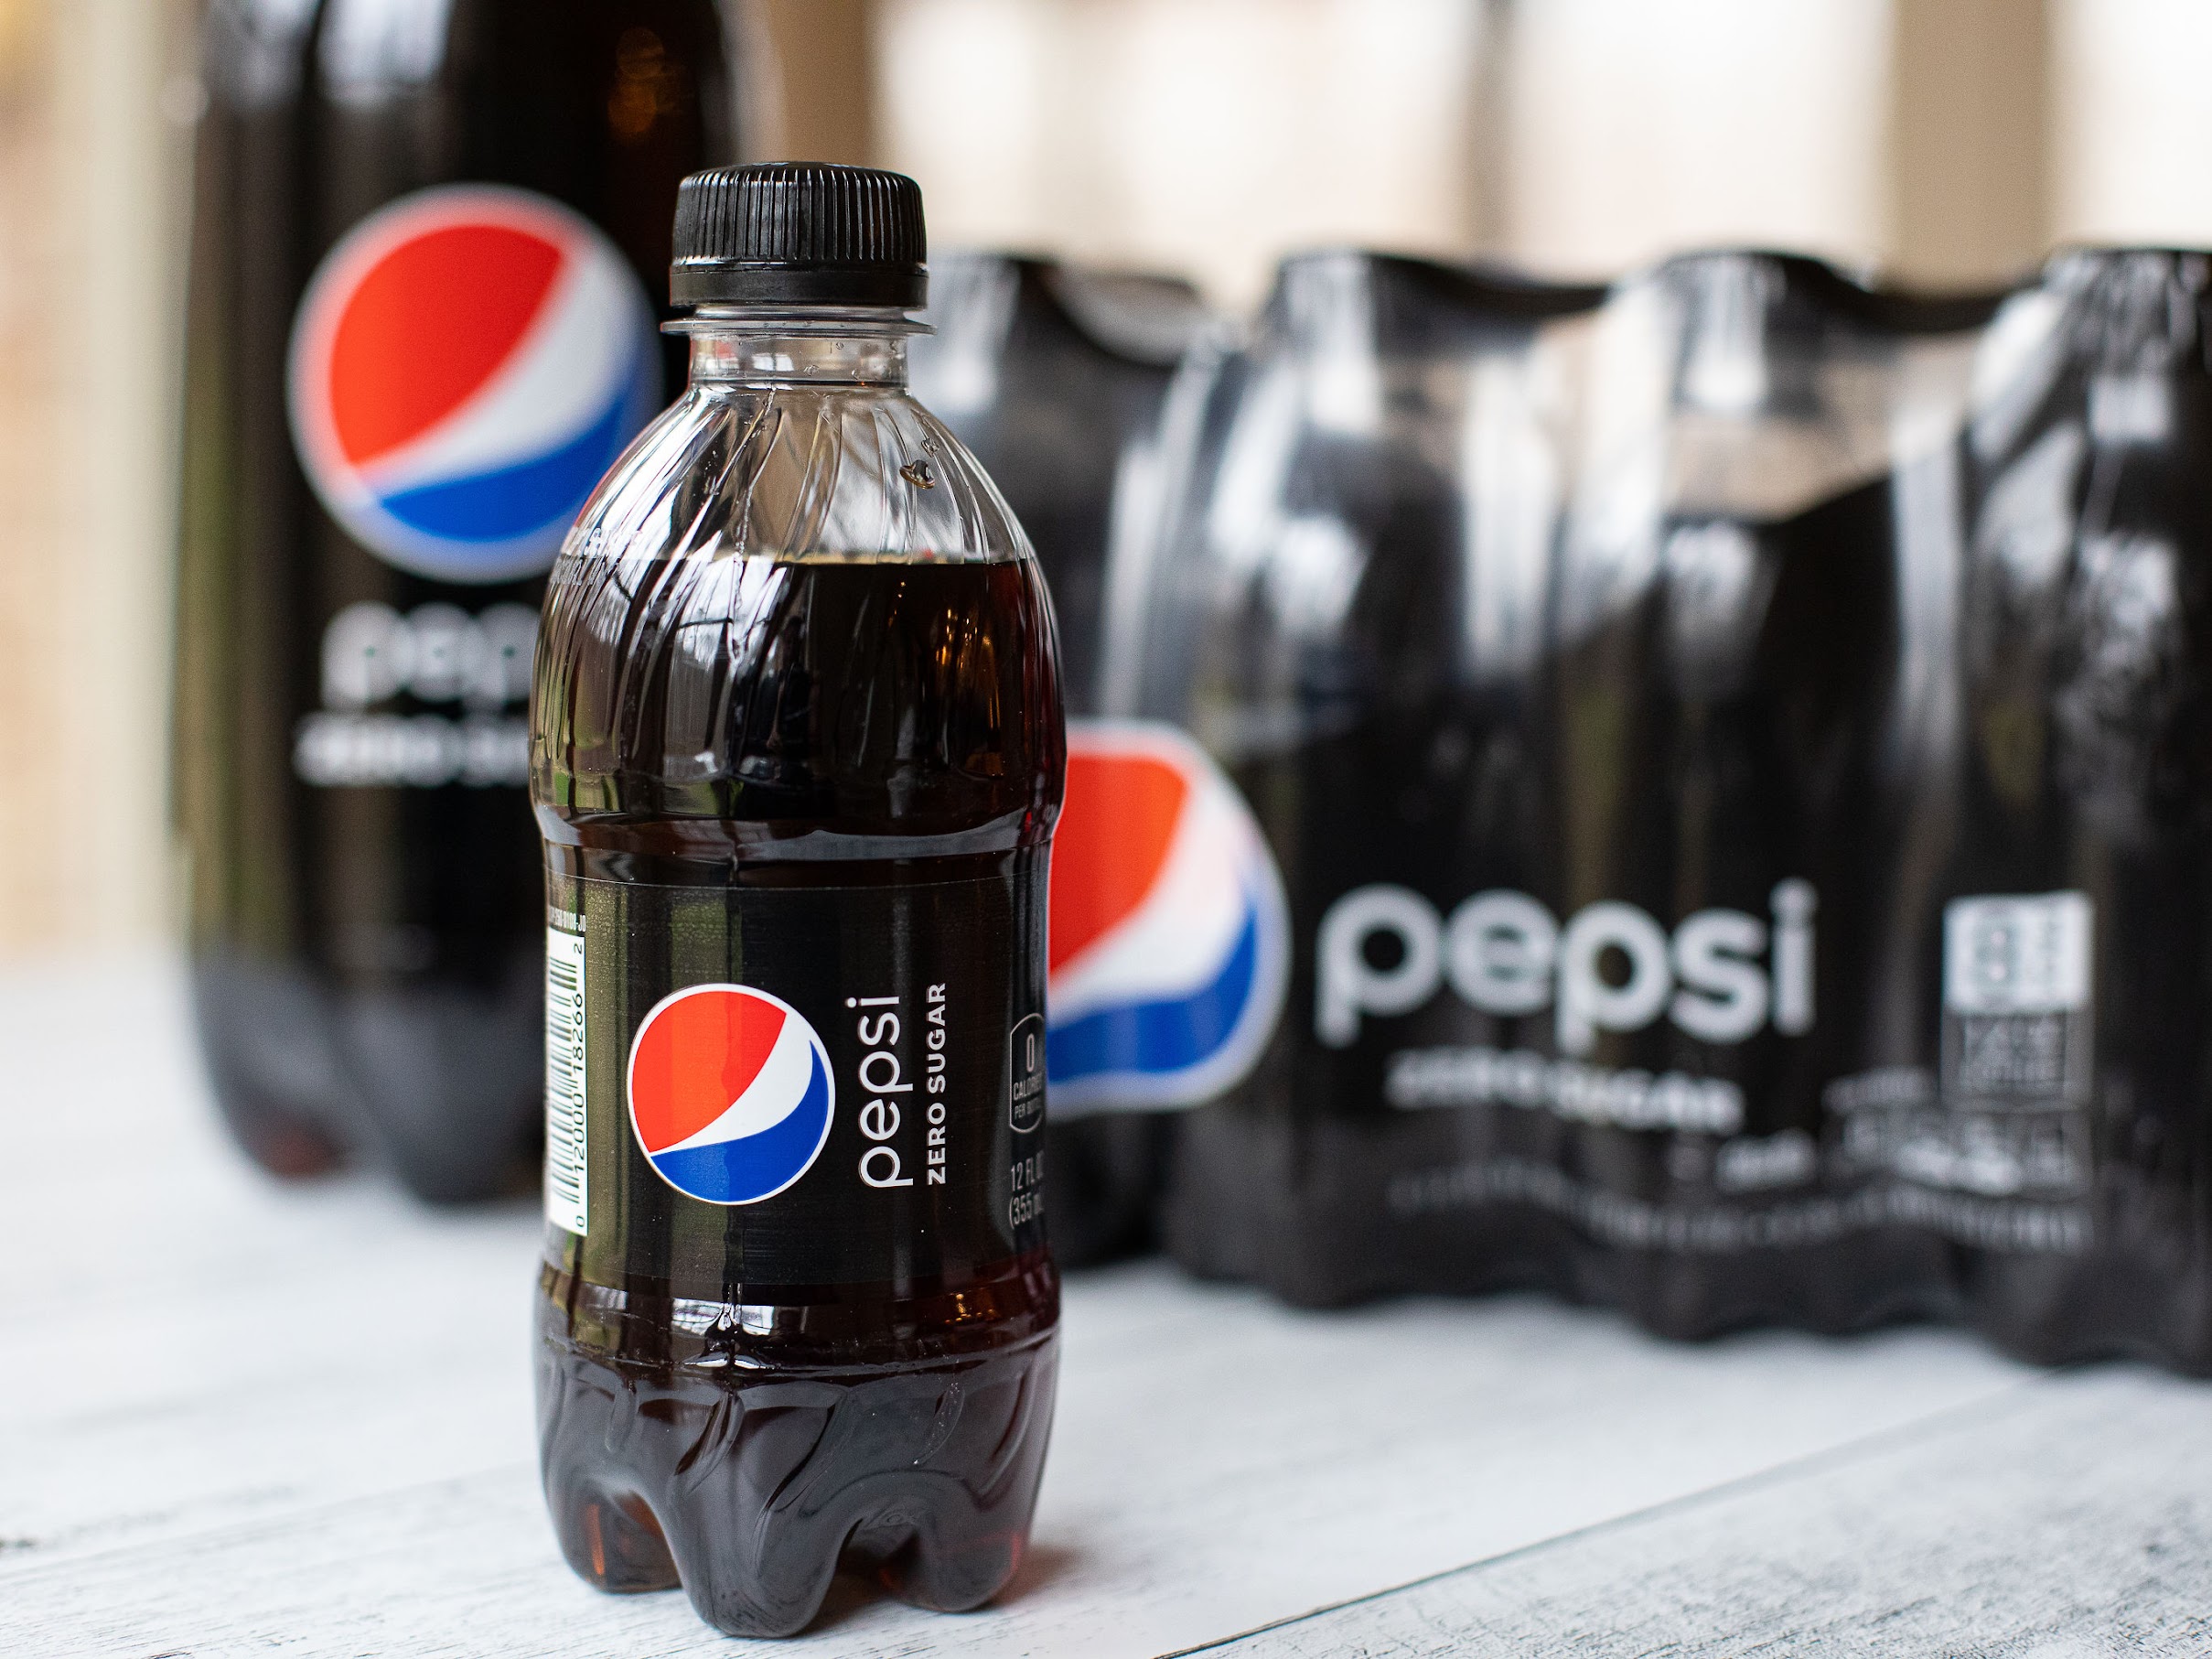 6-Packs Of Pepsi Soda As Low As $3.15 At Publix (Regular Price $7.49)